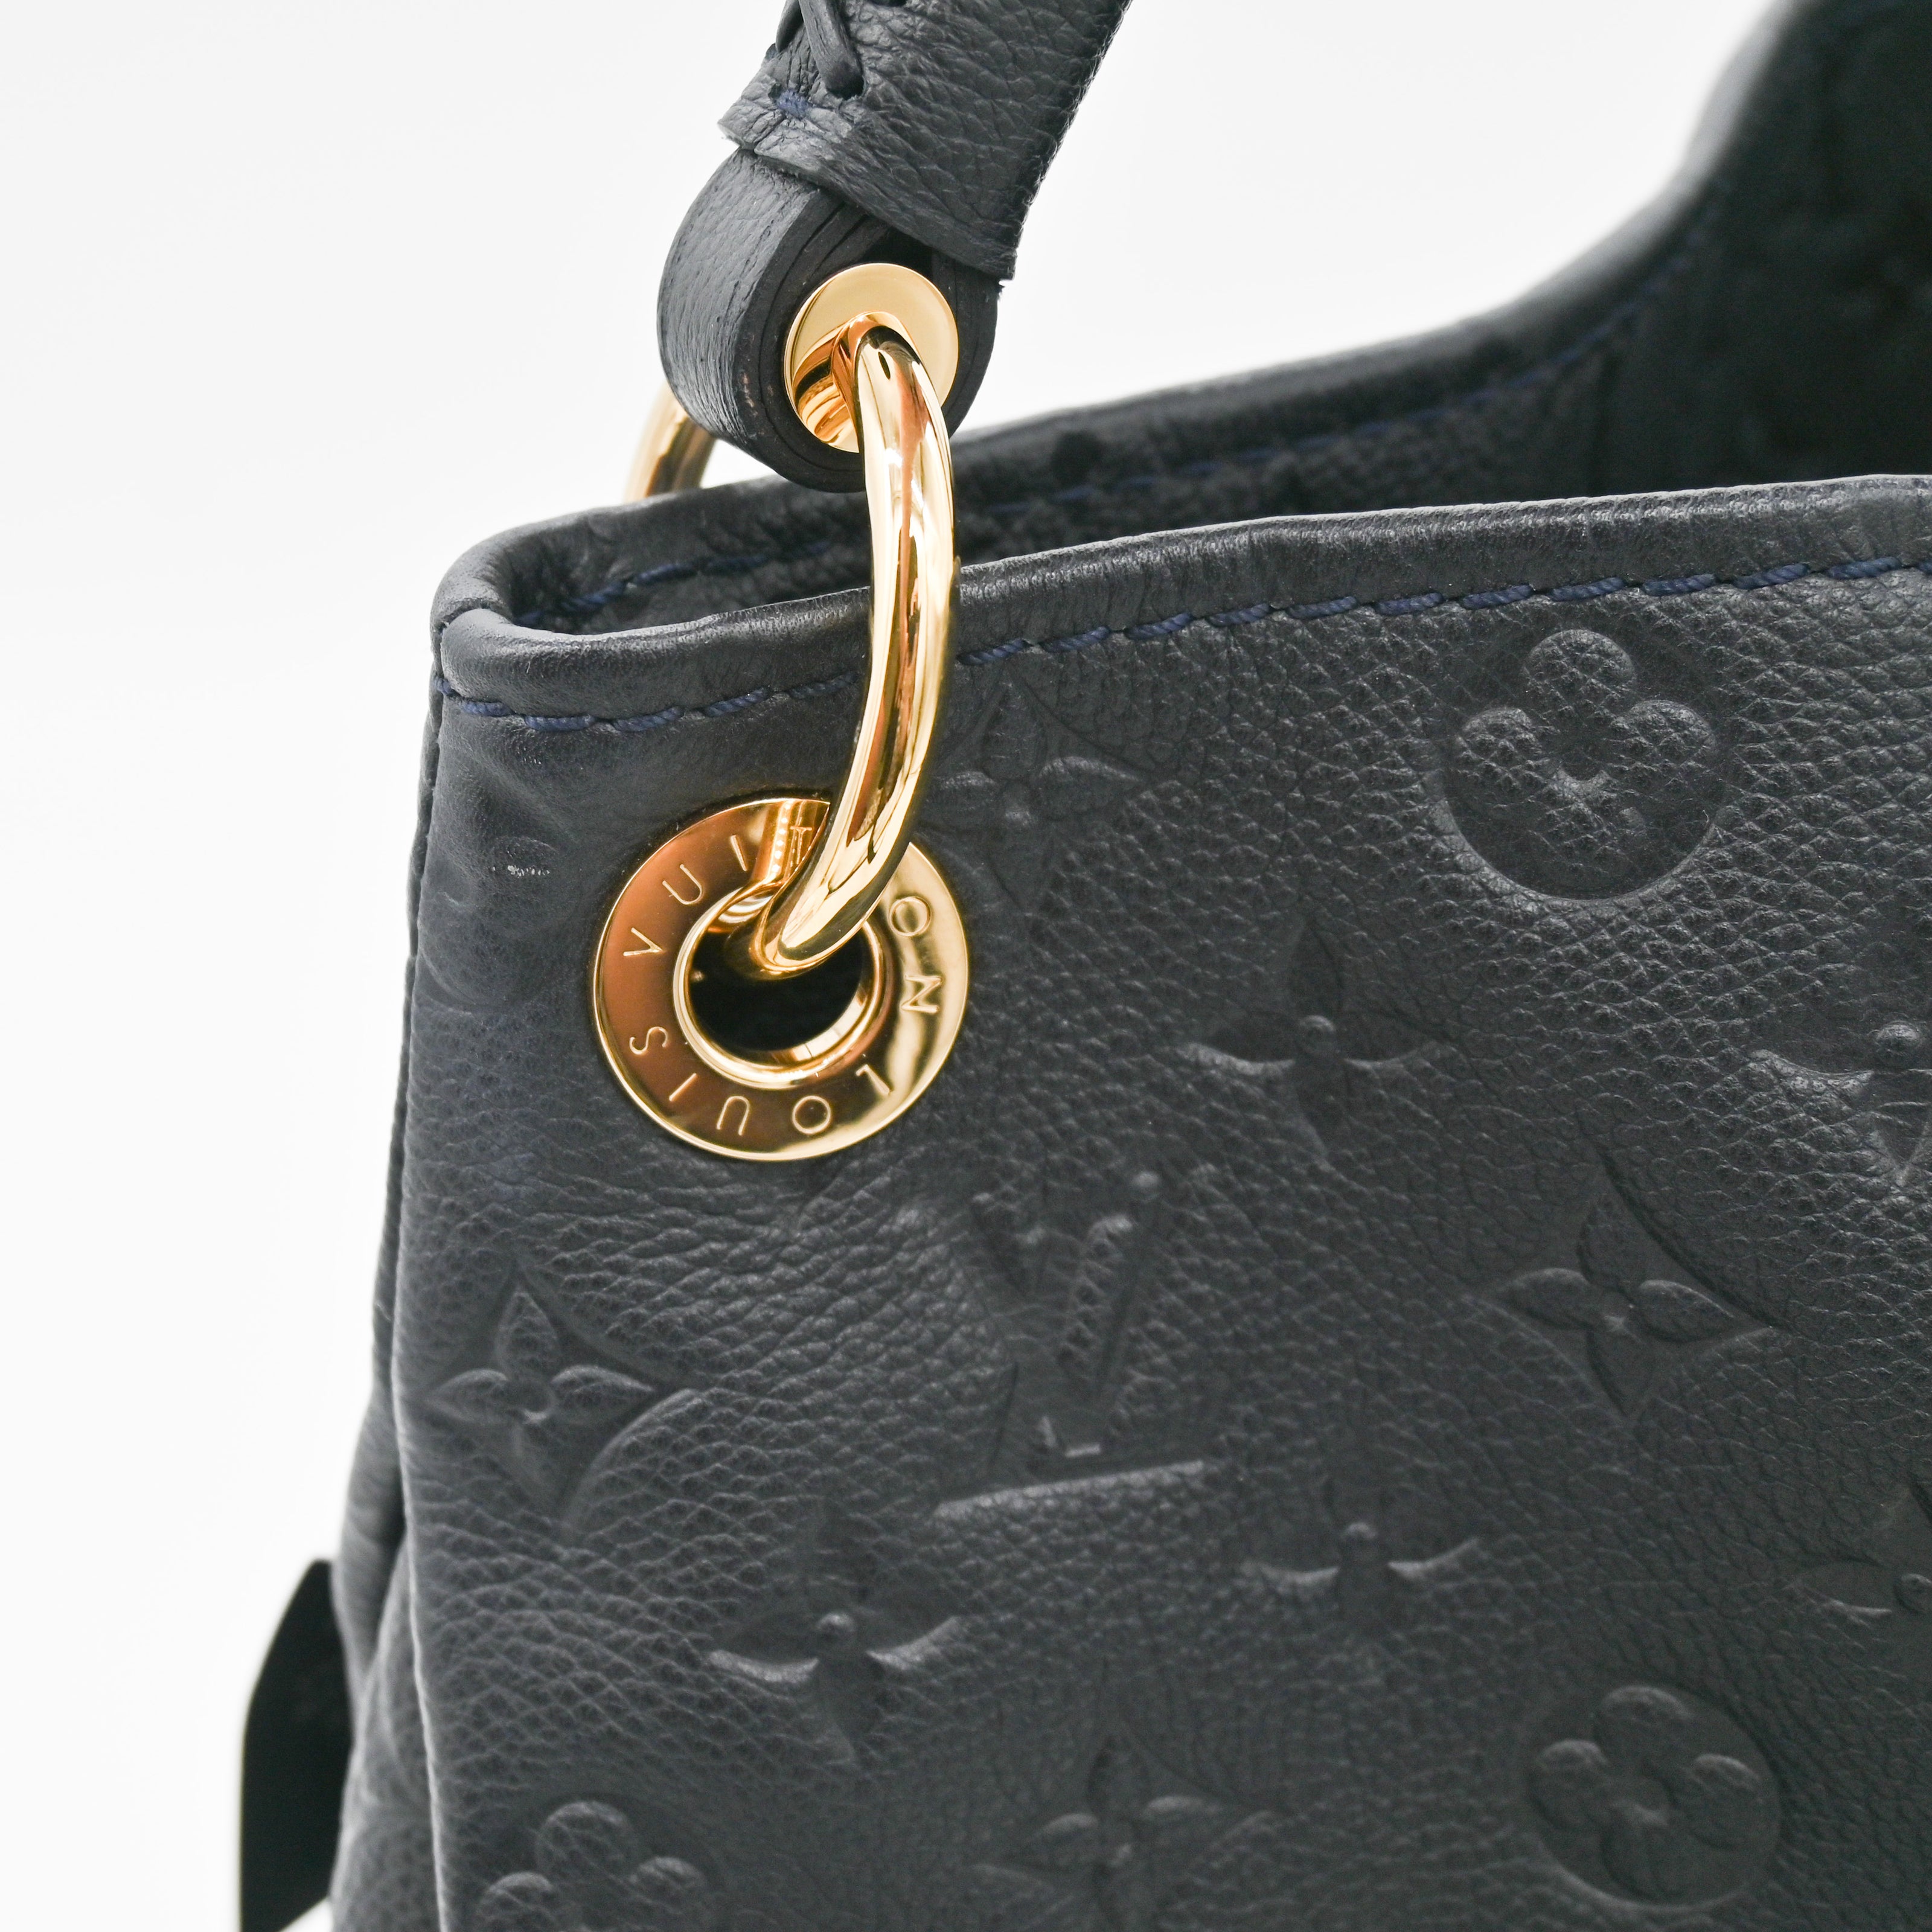 Louis Vuitton, Bags, Louis Vuitton Artsy Emprinte Leather In Navy Blue